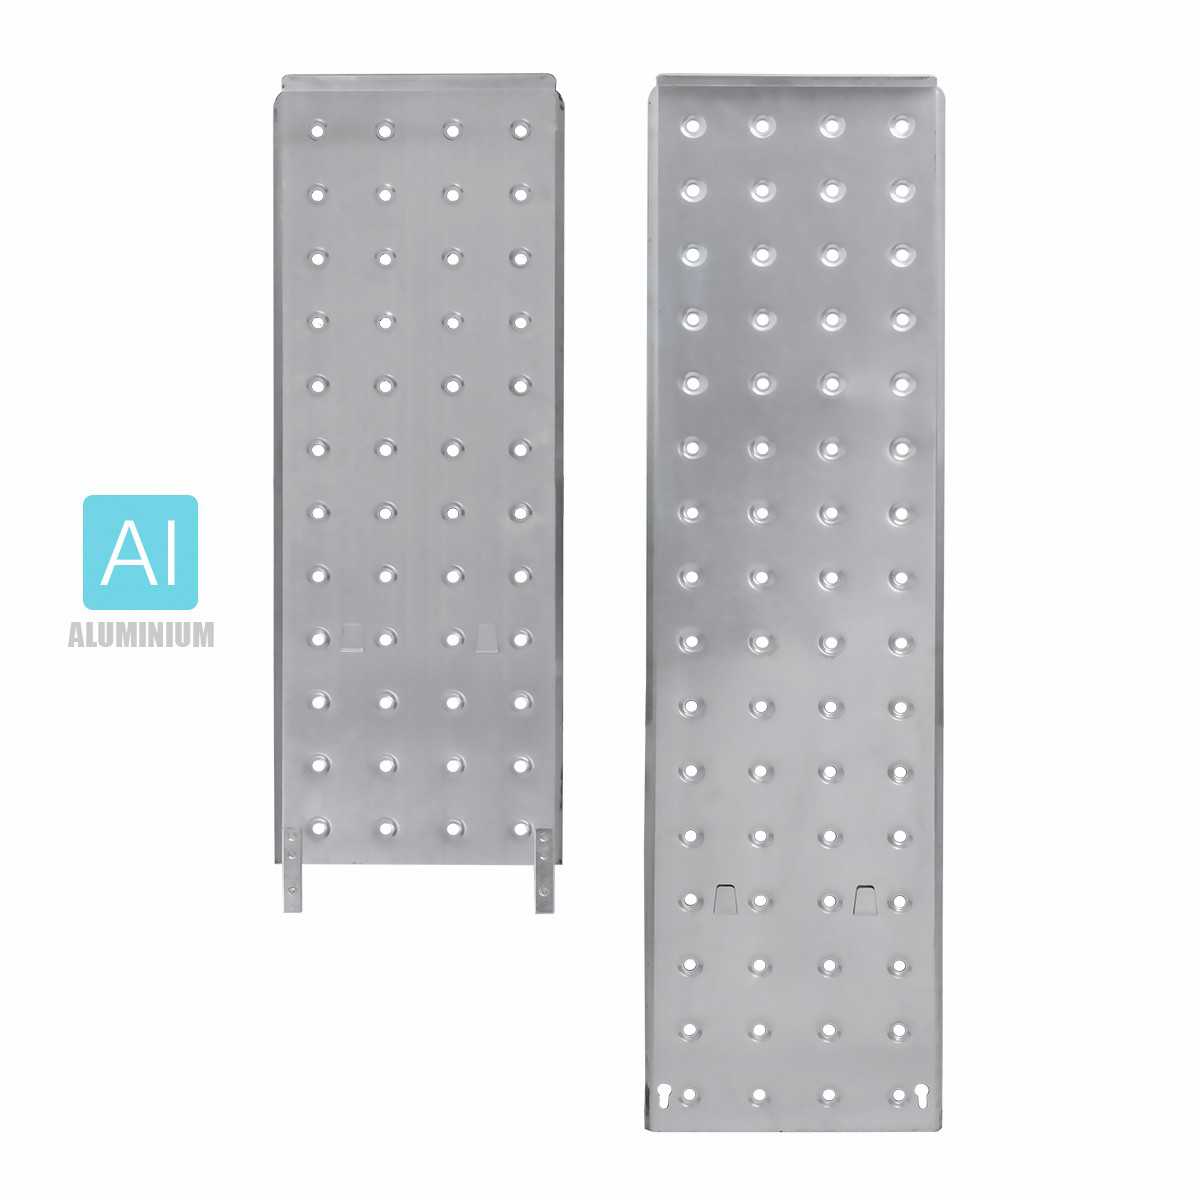 2PCs Aluminum Platform Plates for Folding Step Ladder